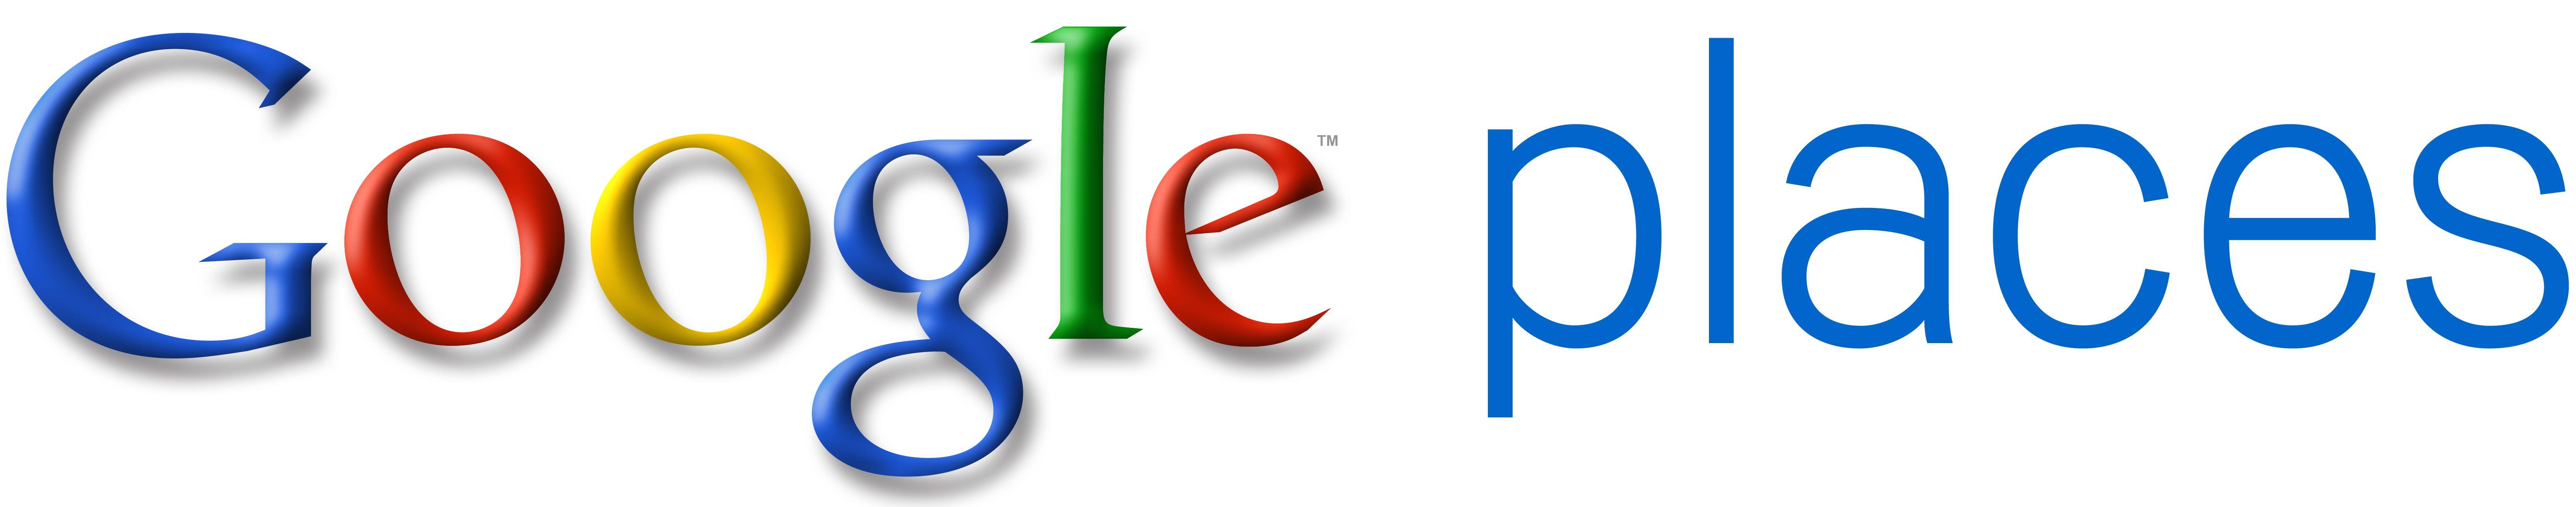 New Google Places Logo - Google Places - Tenzo